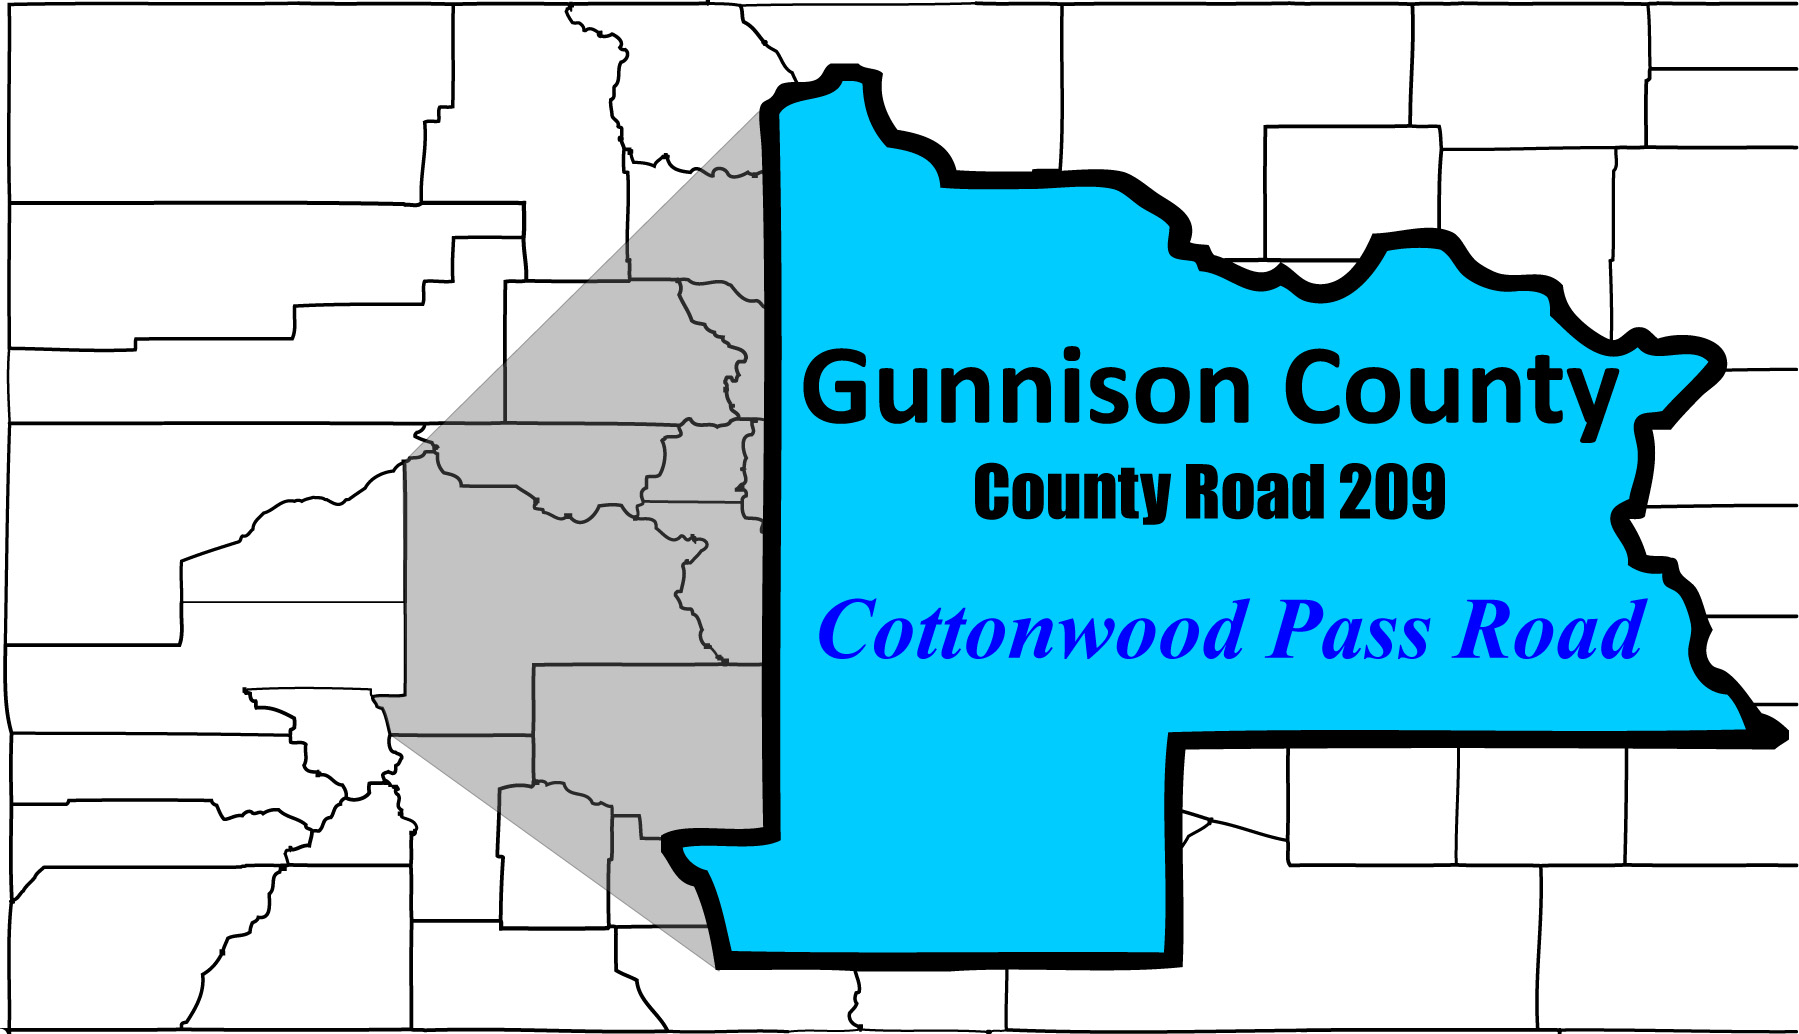 Cottonwood Pass Road